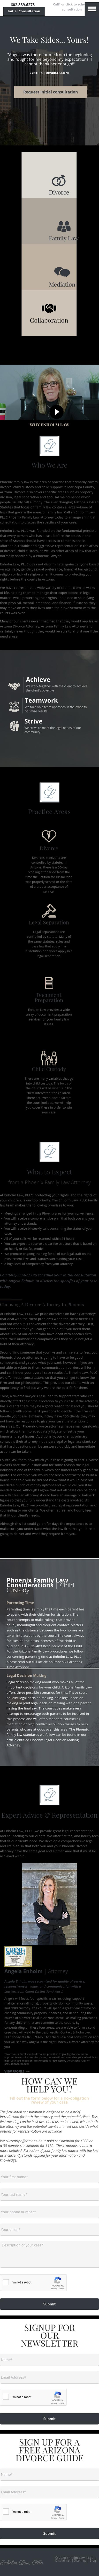 Enholm Law, PLLC - Phoenix AZ Lawyers